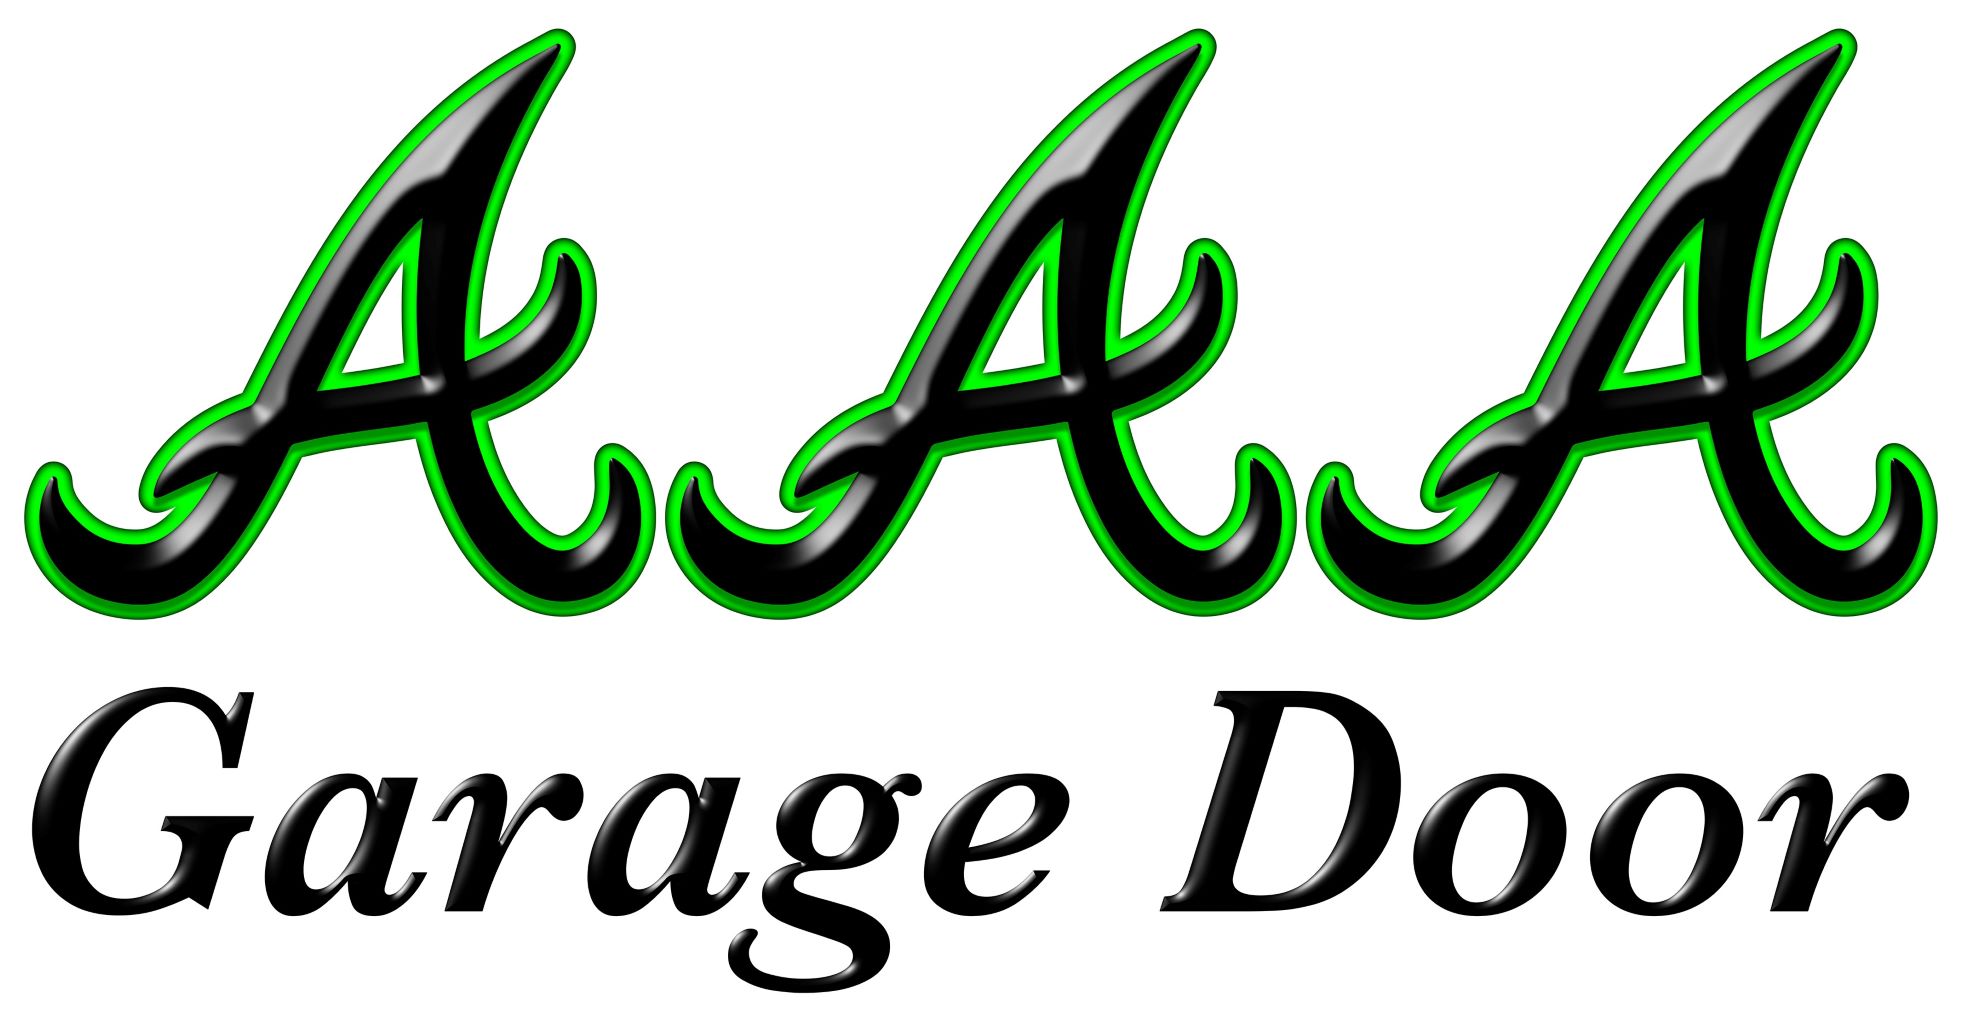 AAA Garage Door, Inc. Logo